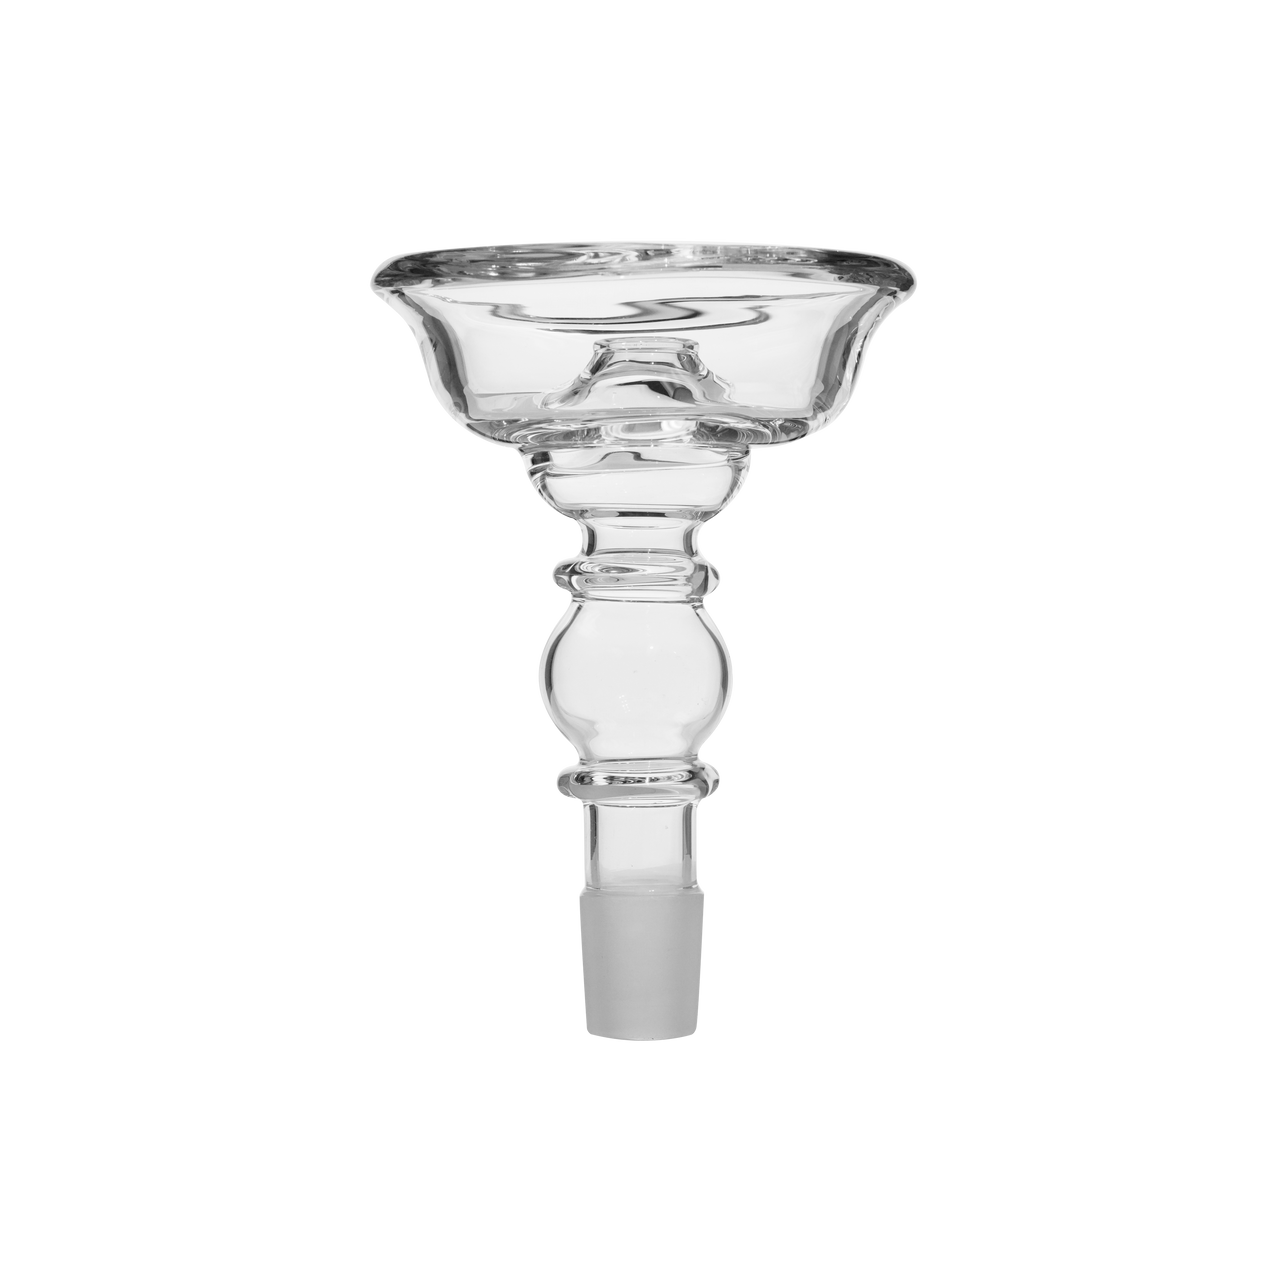 Lavoo Male-Fitting Glass Funnel Bowl - TheHookah.com